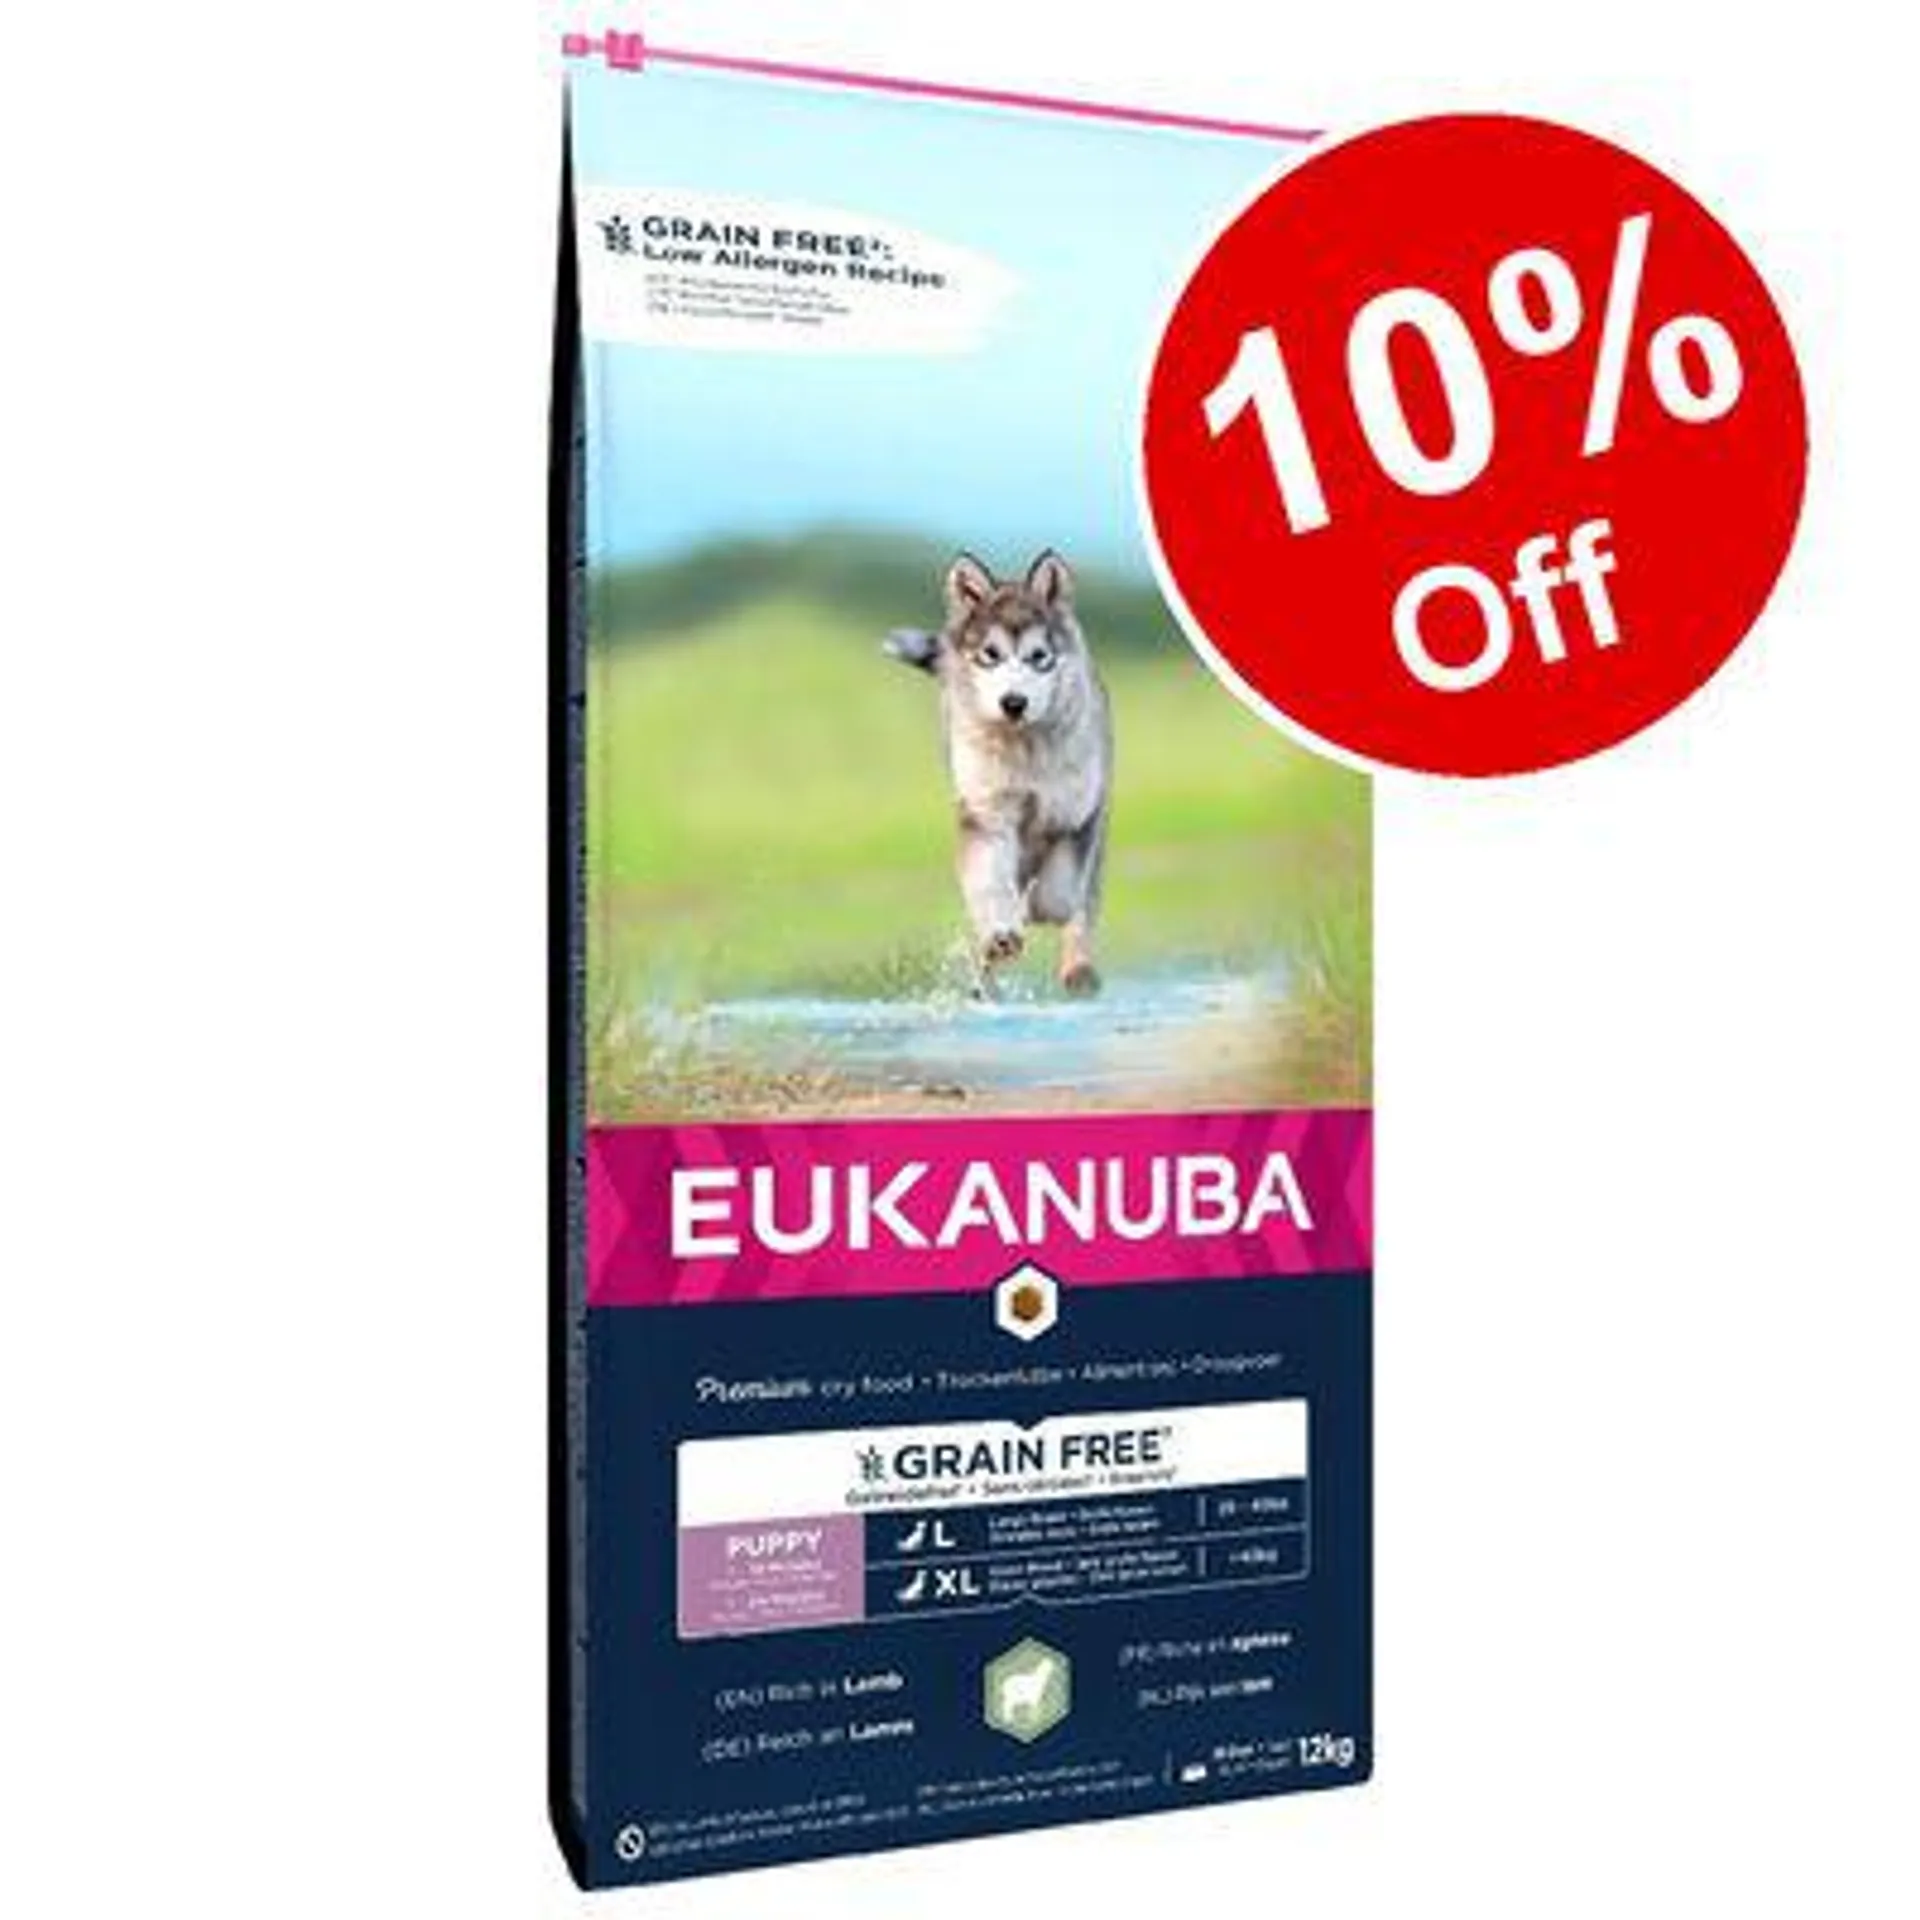 12kg Eukanuba Grain Free Puppy Dry Dog Food - 10% Off! *